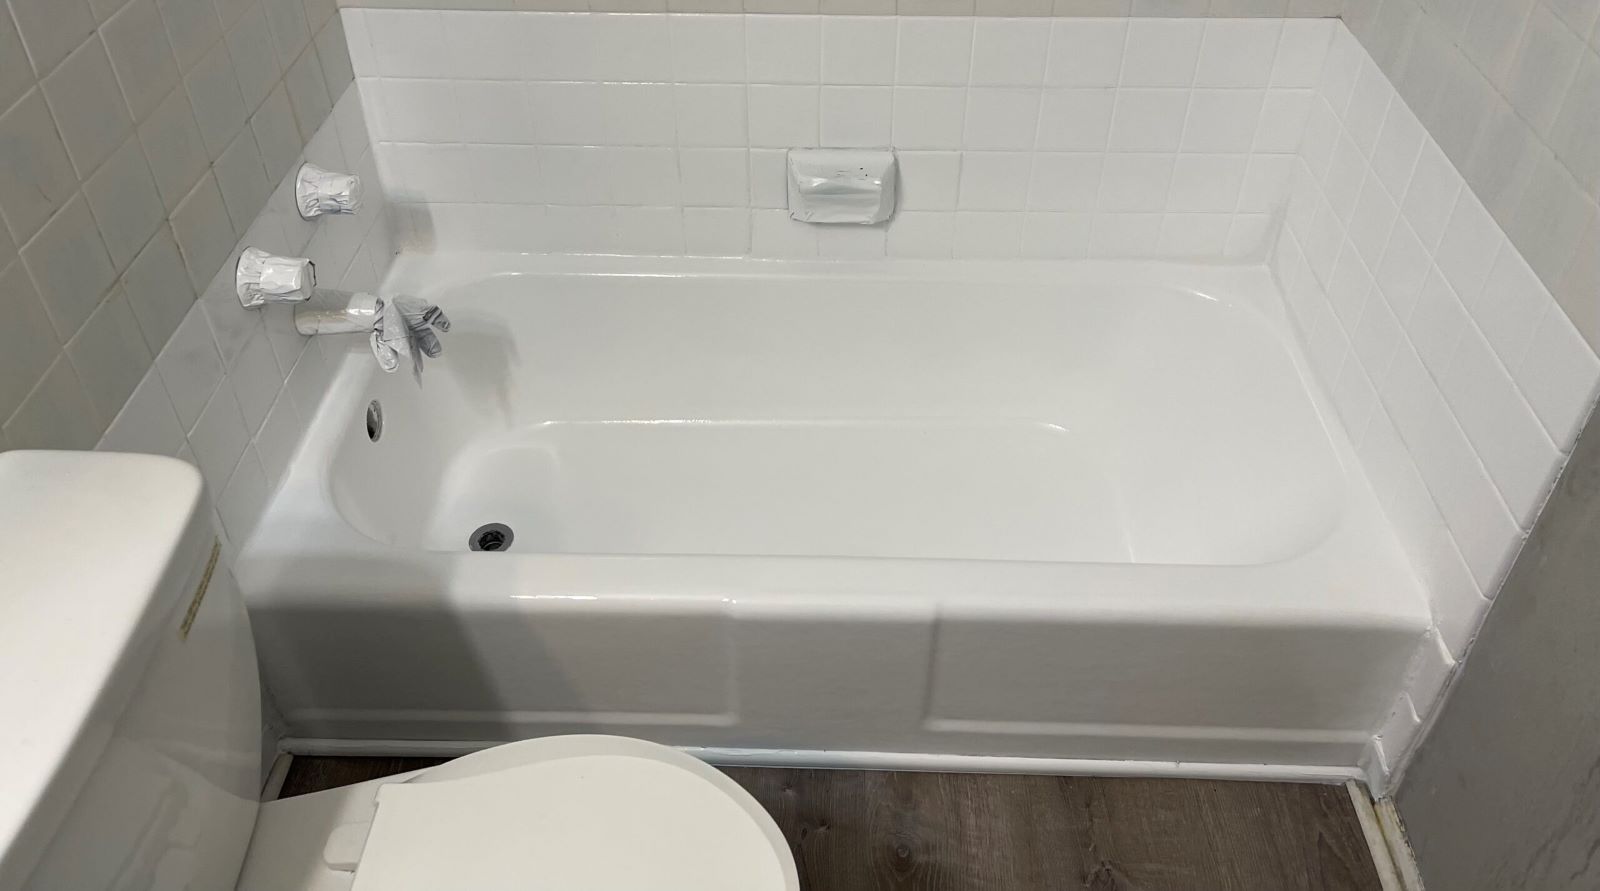 Affordable Bathtub Resurfacing Brentwood, MO | Bathtub Refinishing in Brentwood, MO | A New Look Resurfacing